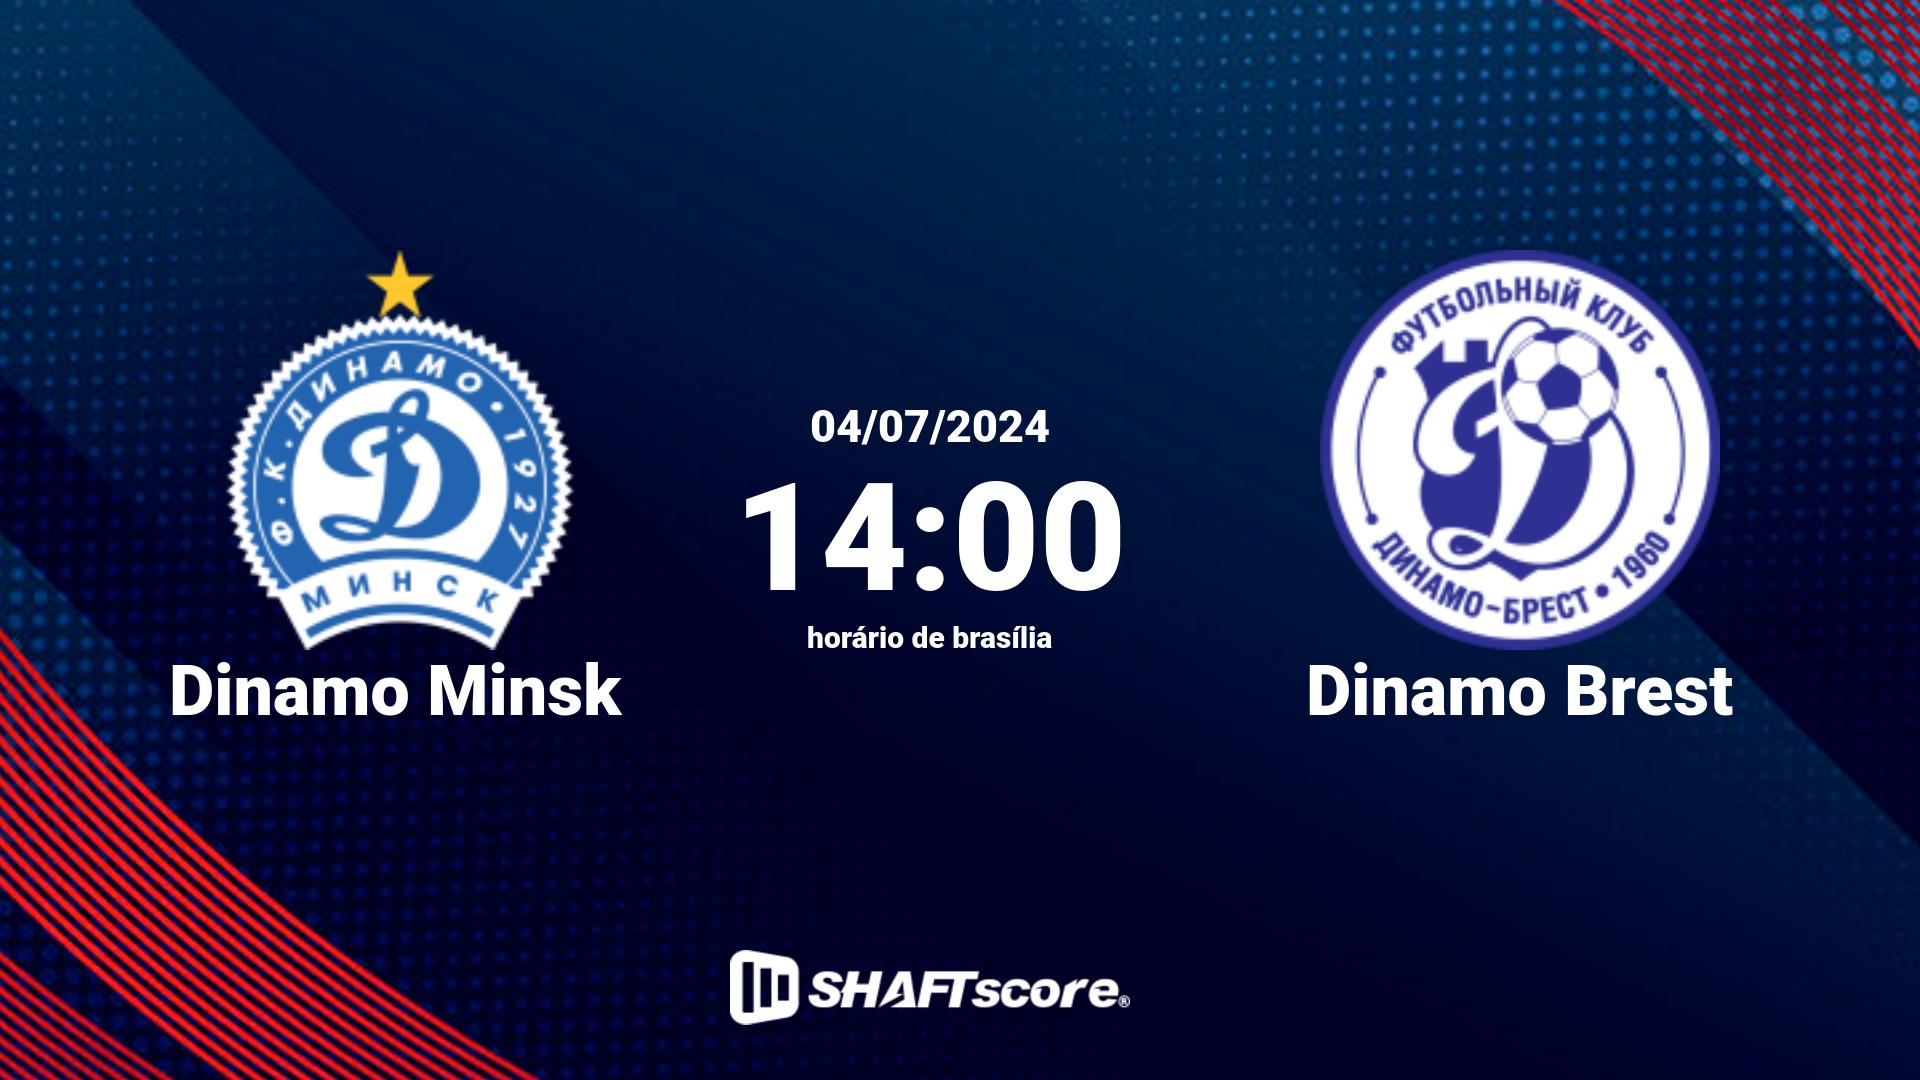 Estatísticas do jogo Dinamo Minsk vs Dinamo Brest 04.07 14:00